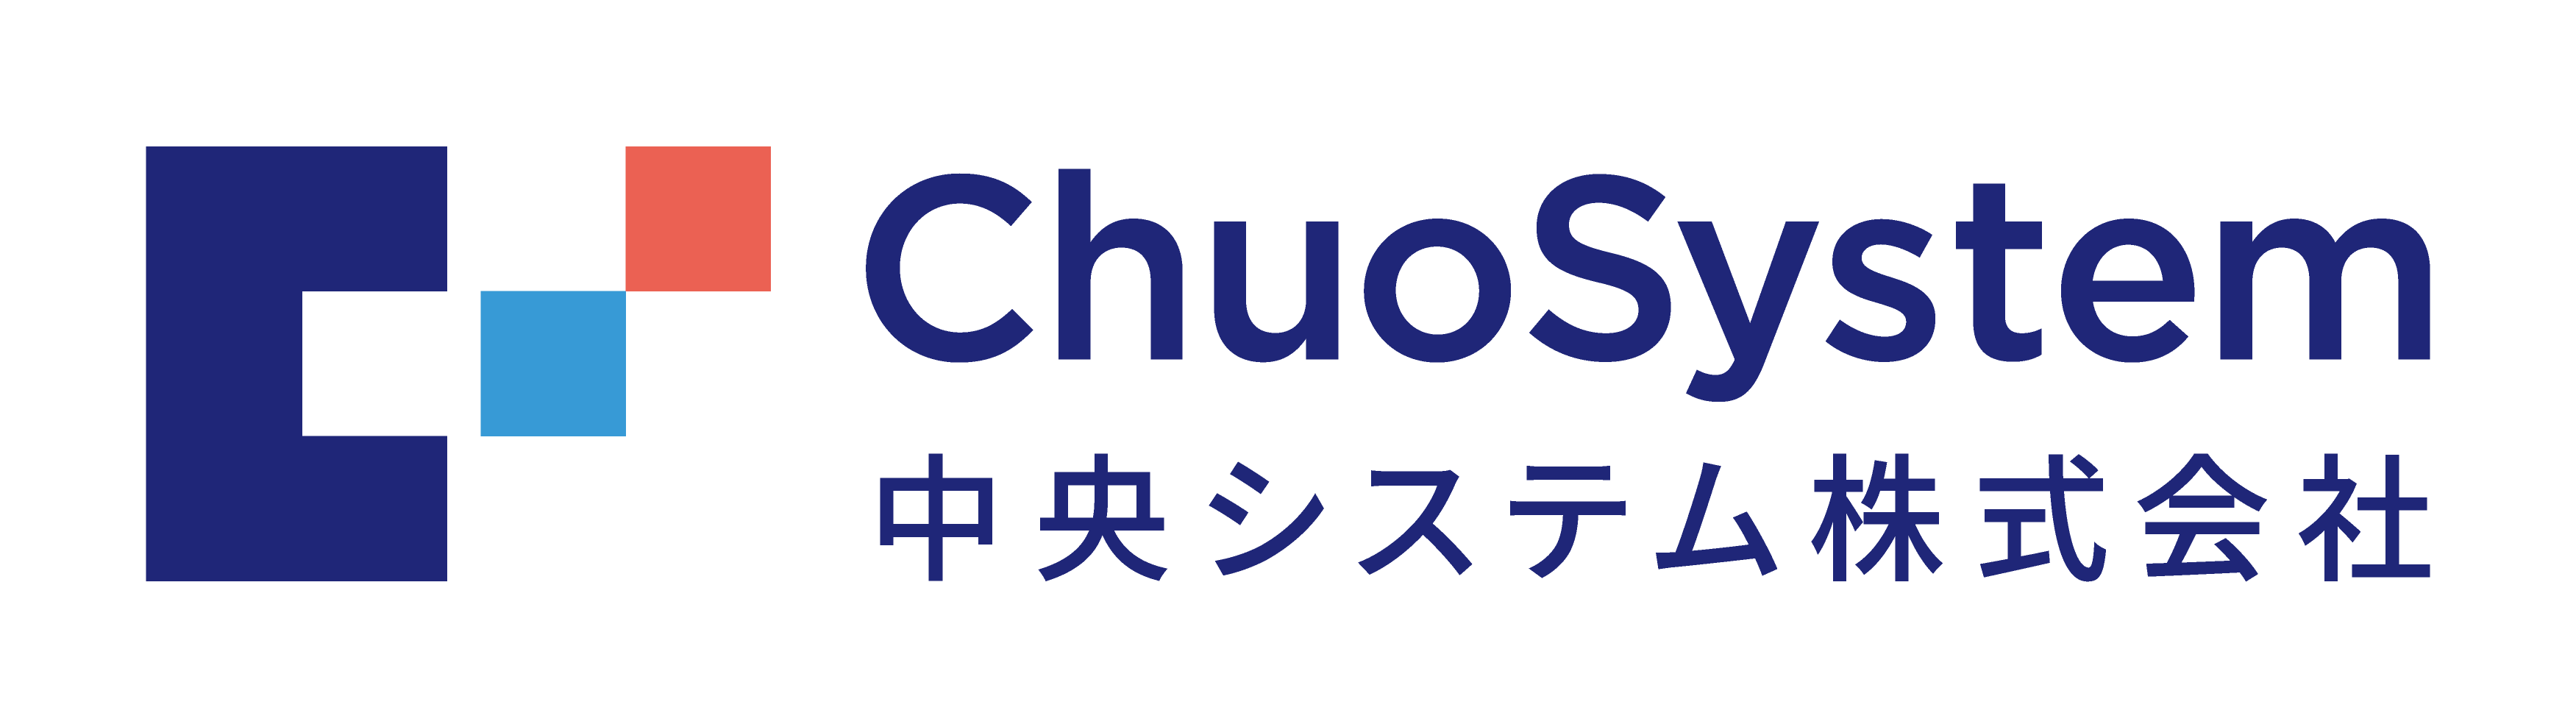 ChuoSystem 中央システム株式会社